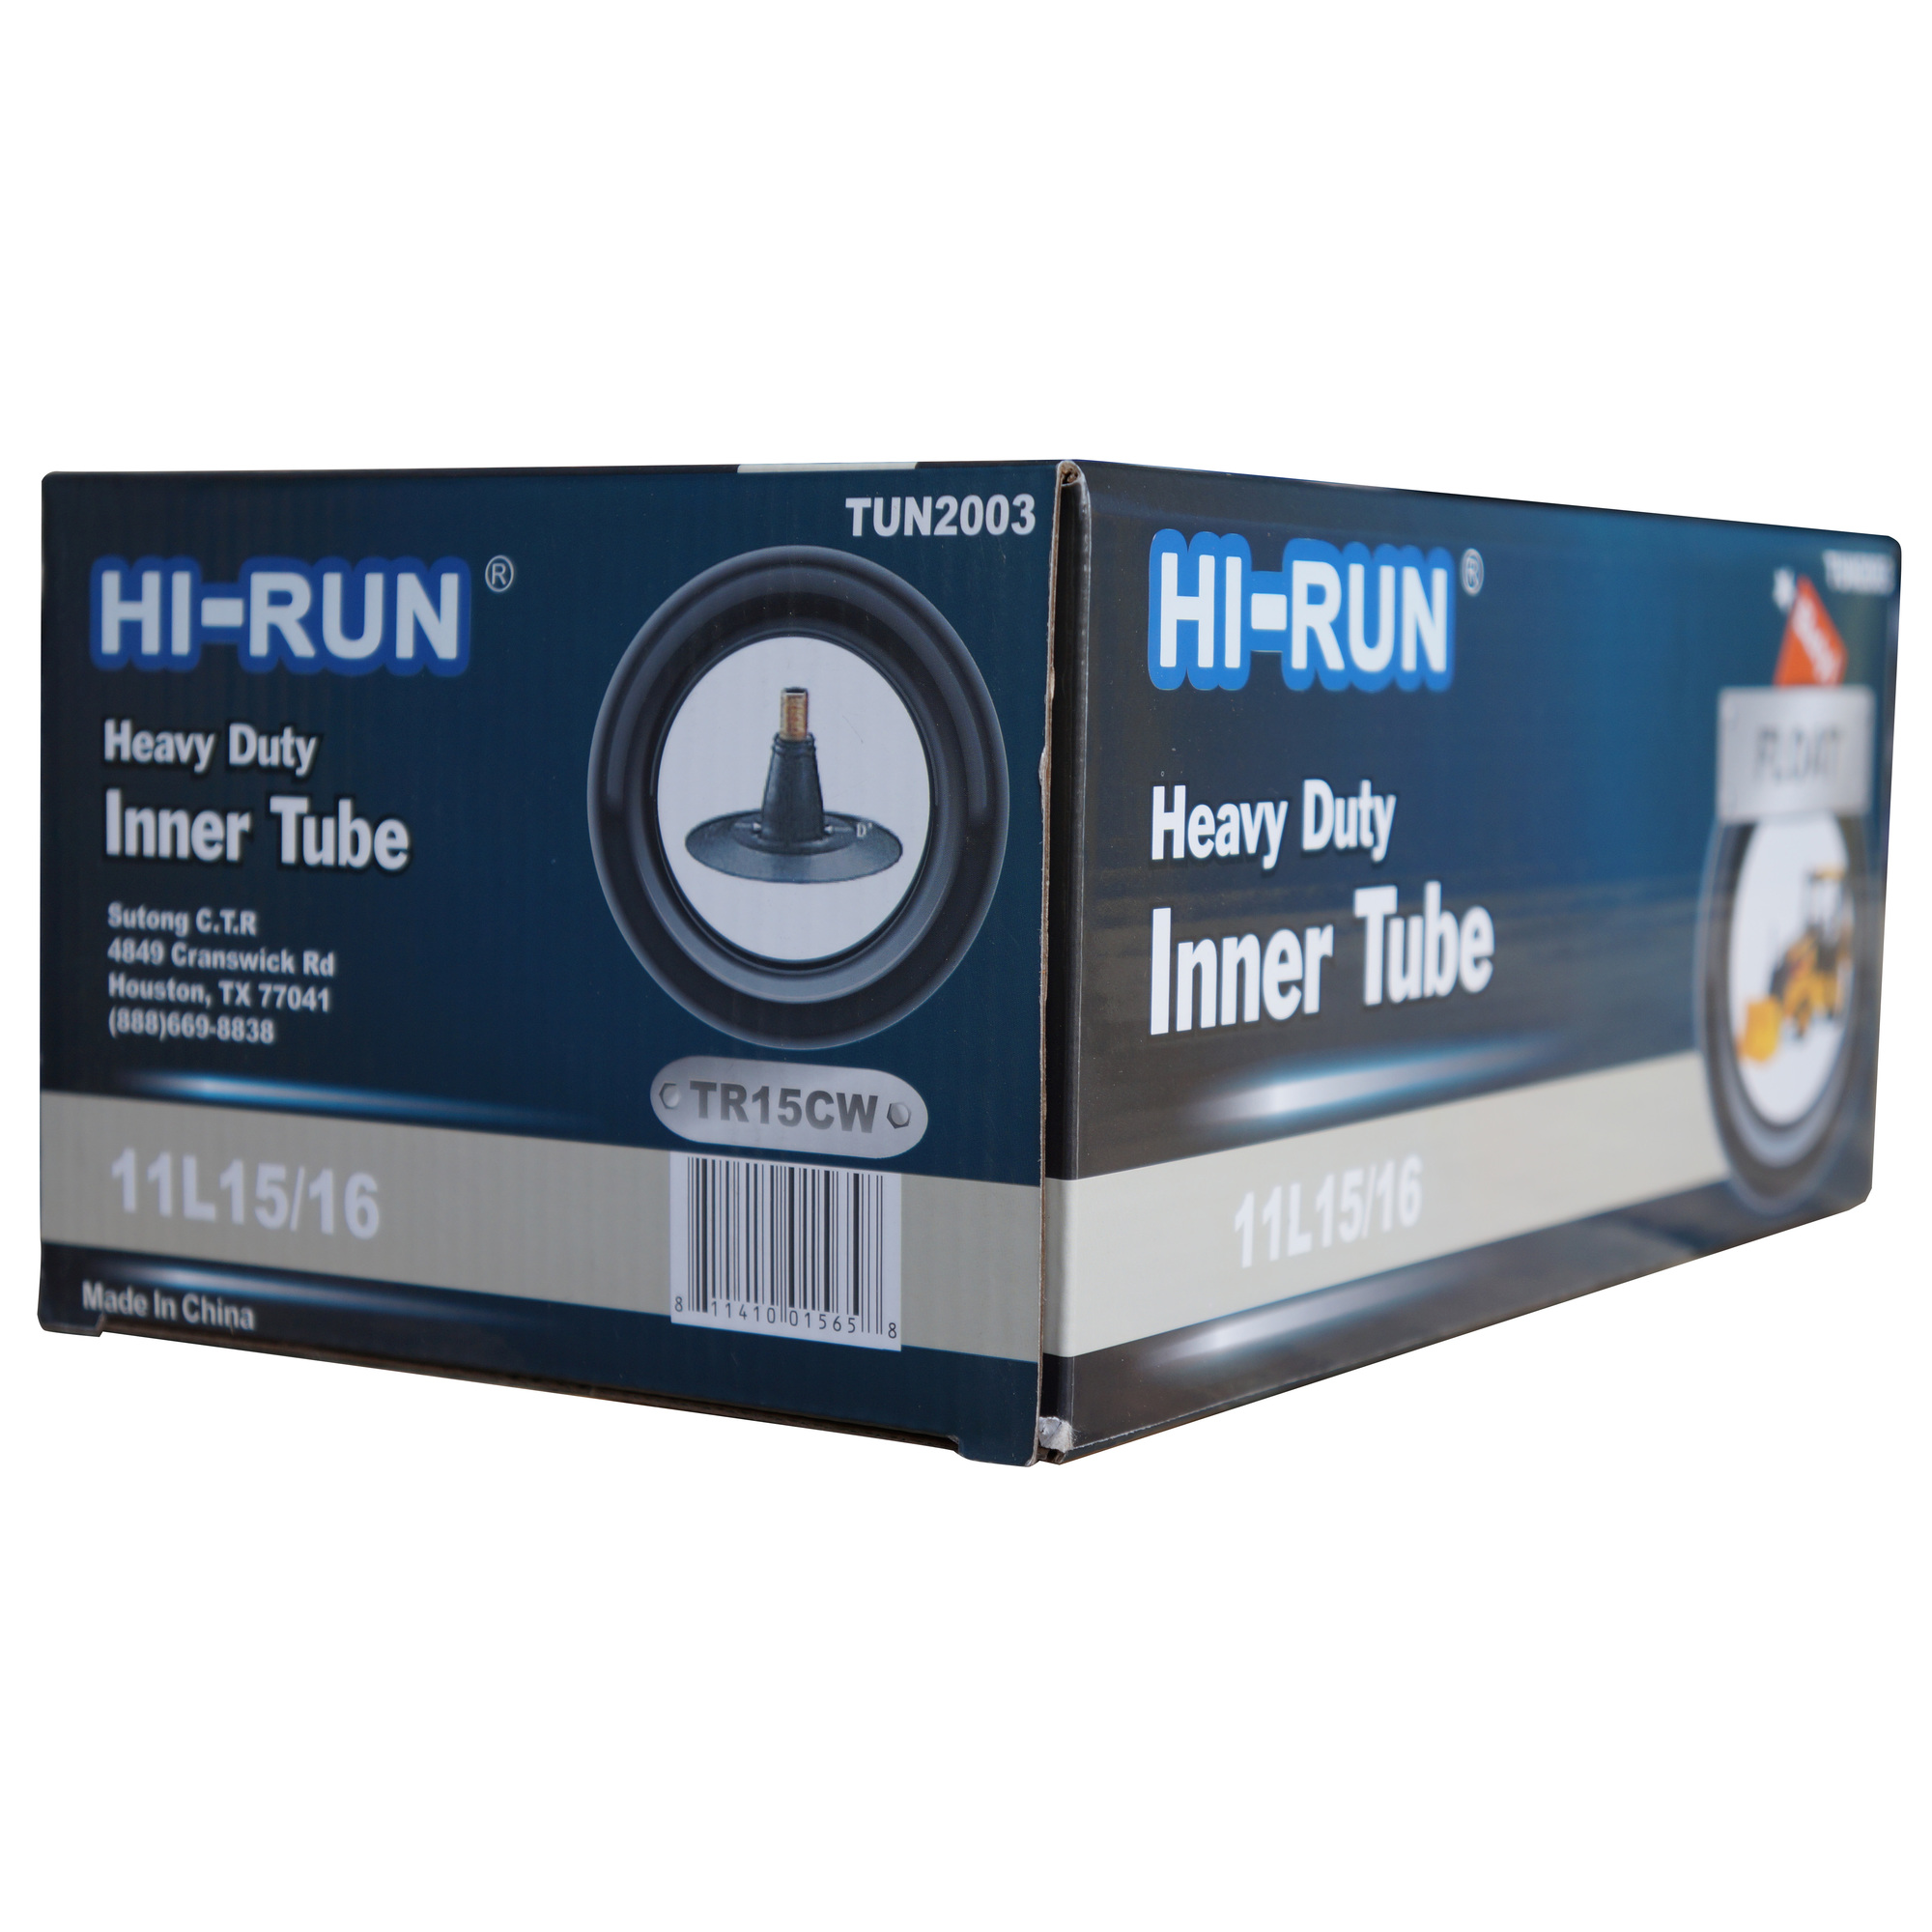 HI-RUN, Tube 11L15/16SL (TR15CW) Float Implement, Fits Rim Size 15 in, Included (qty.) 1 Model TUN2003